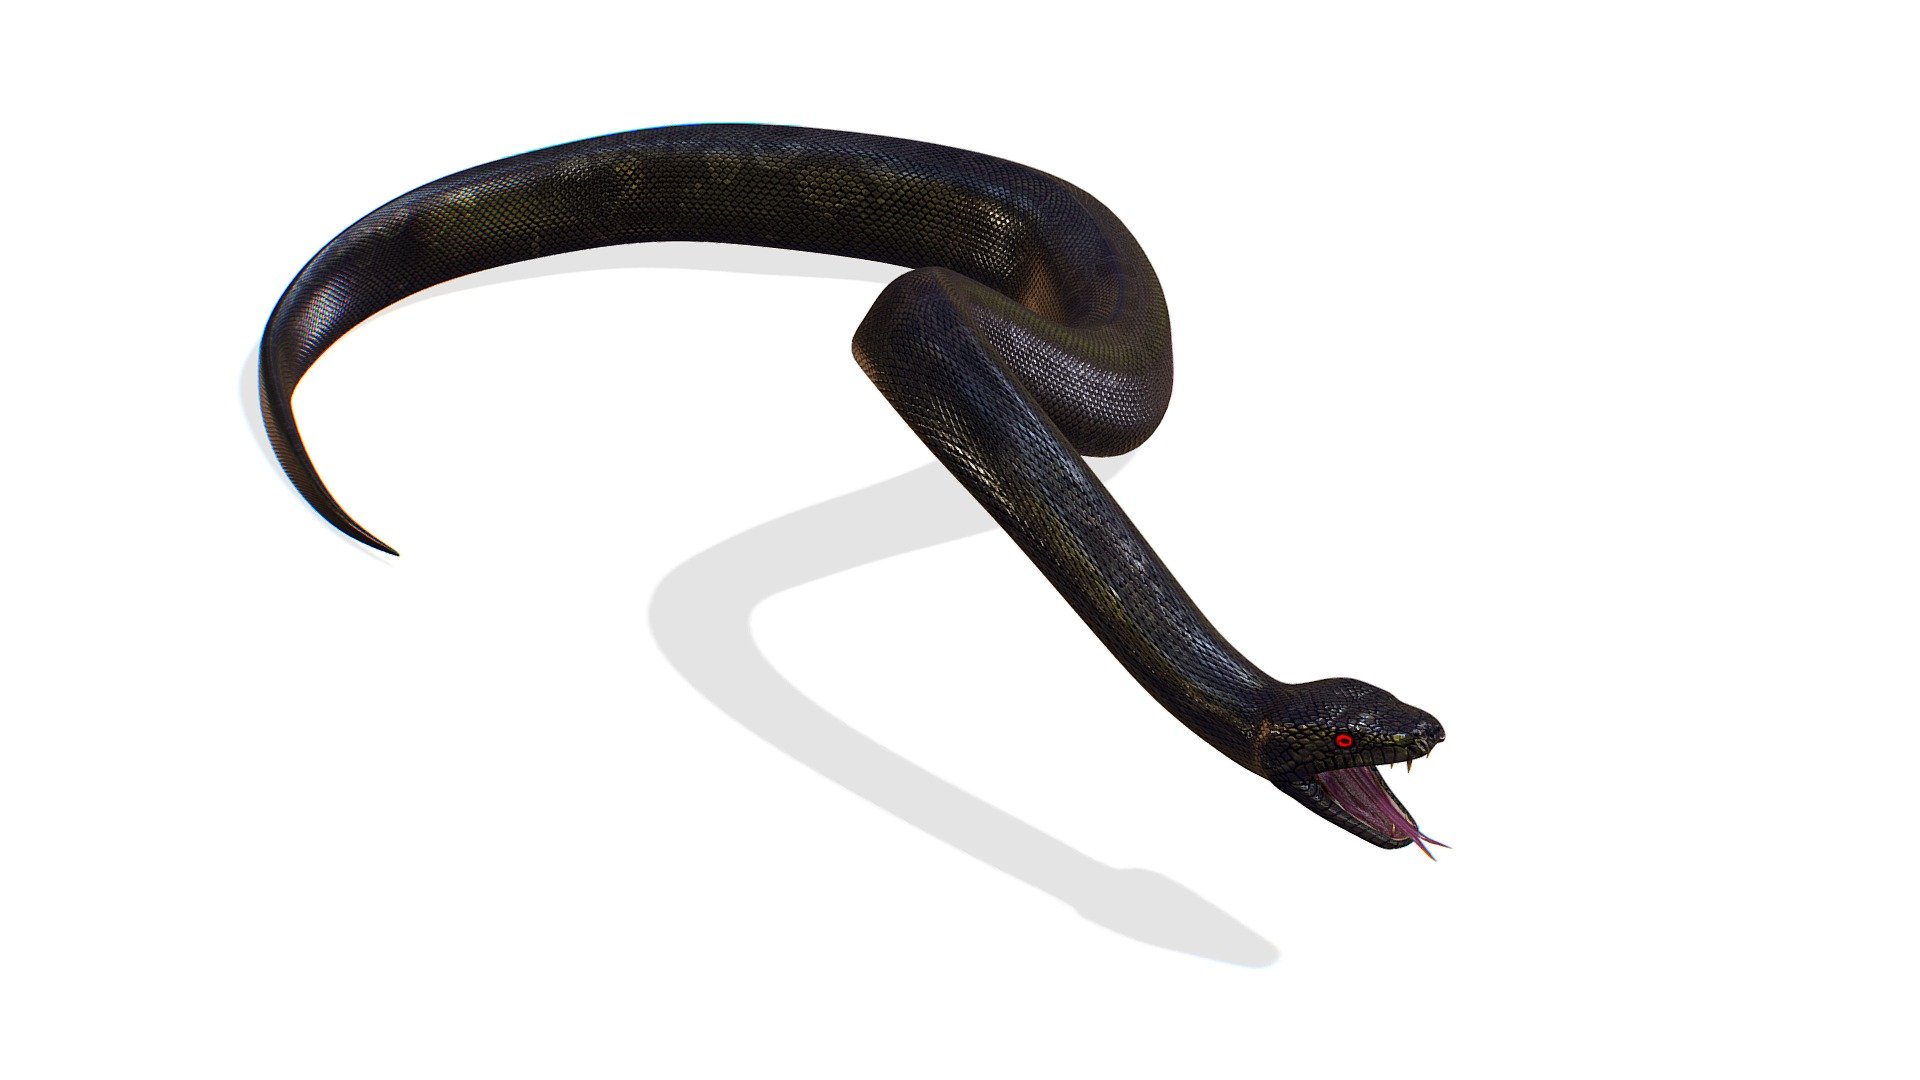 Skined/Rig LowPoly Realistic Black Python Snake, 1024x1024 texture size (normal,diffuse,specular) 3dsMax file included - Skined LowPoly Realistic Black Python Snake - Buy Royalty Free 3D model by Oleg Shuldiakov (@olegshuldiakov) 3d model